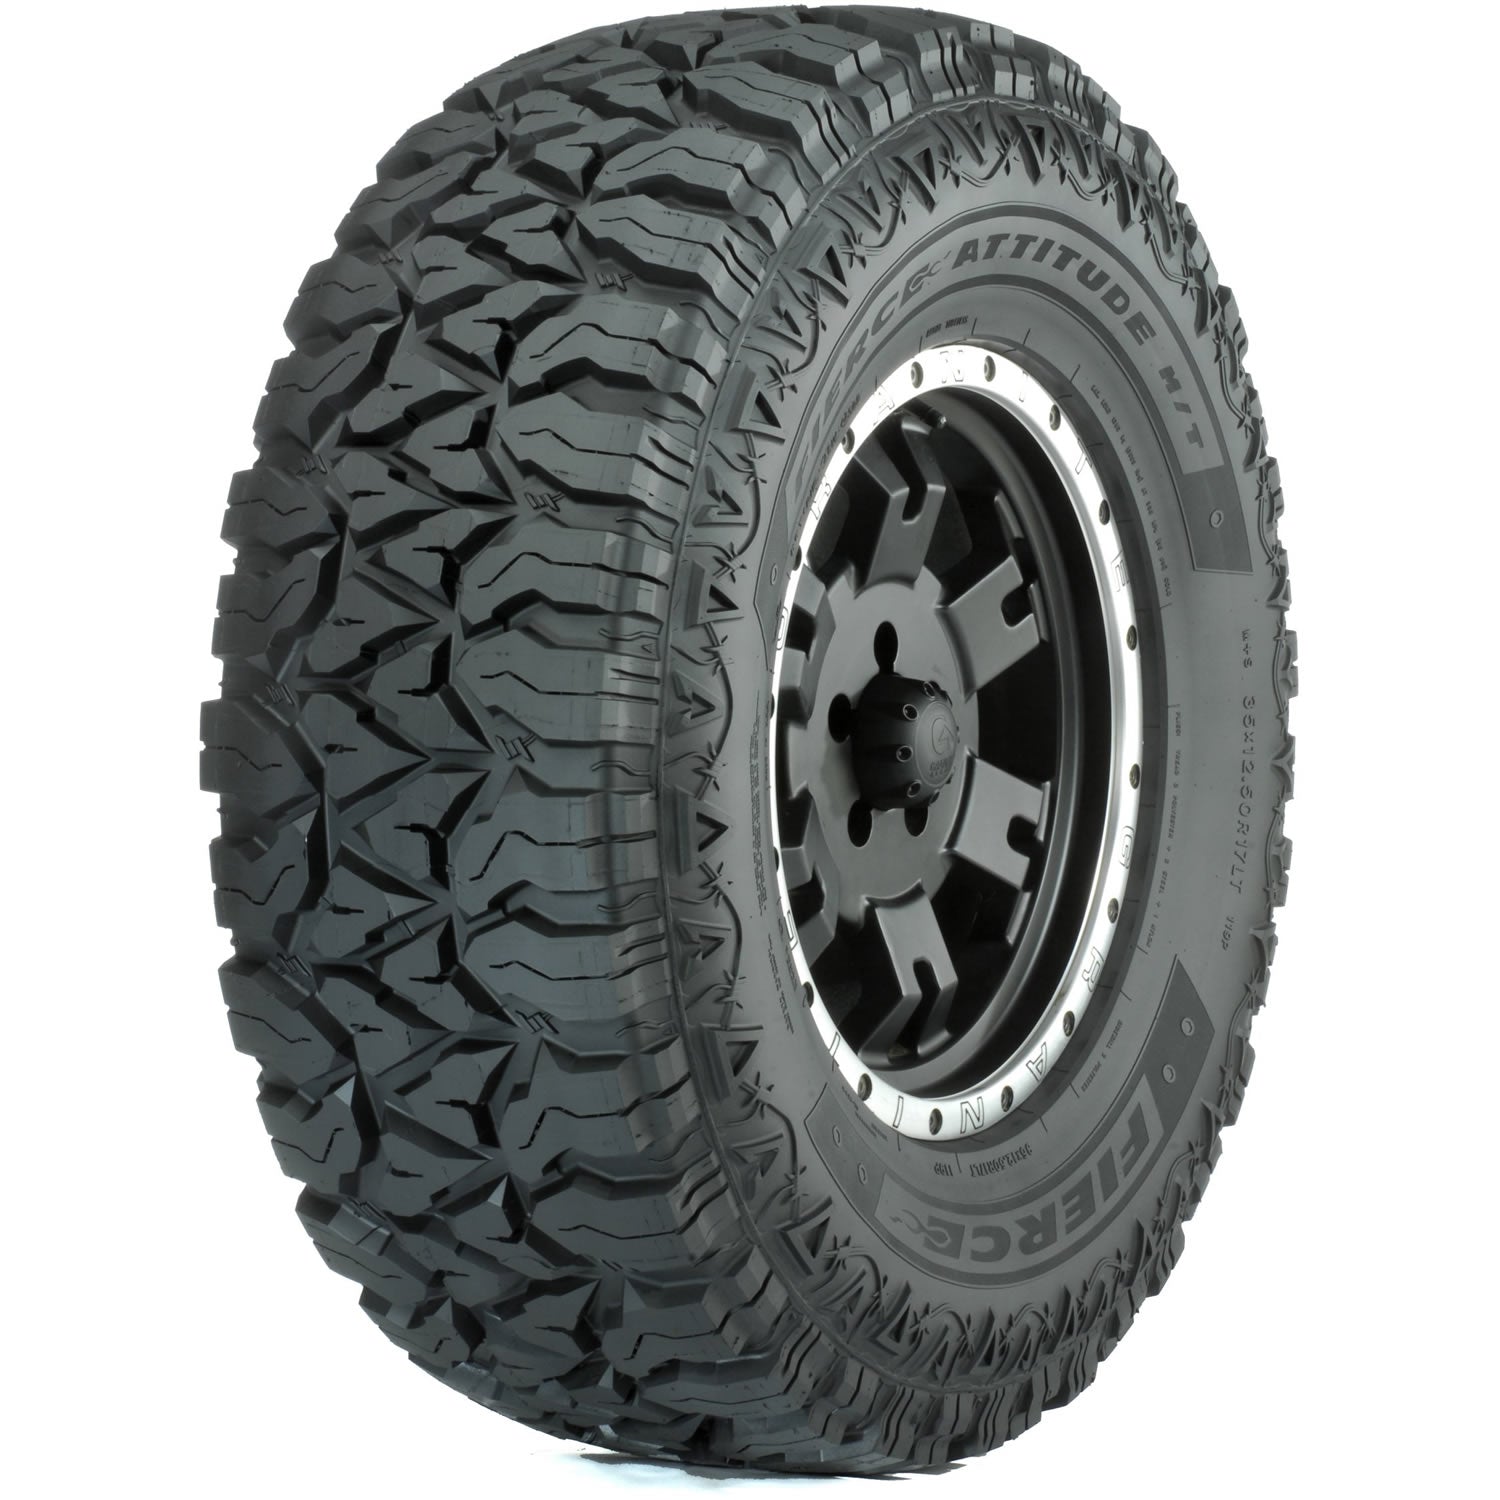 FIERCE ATTITUDE MT LT225/75R16 (29.3X8.8R 16) Tires